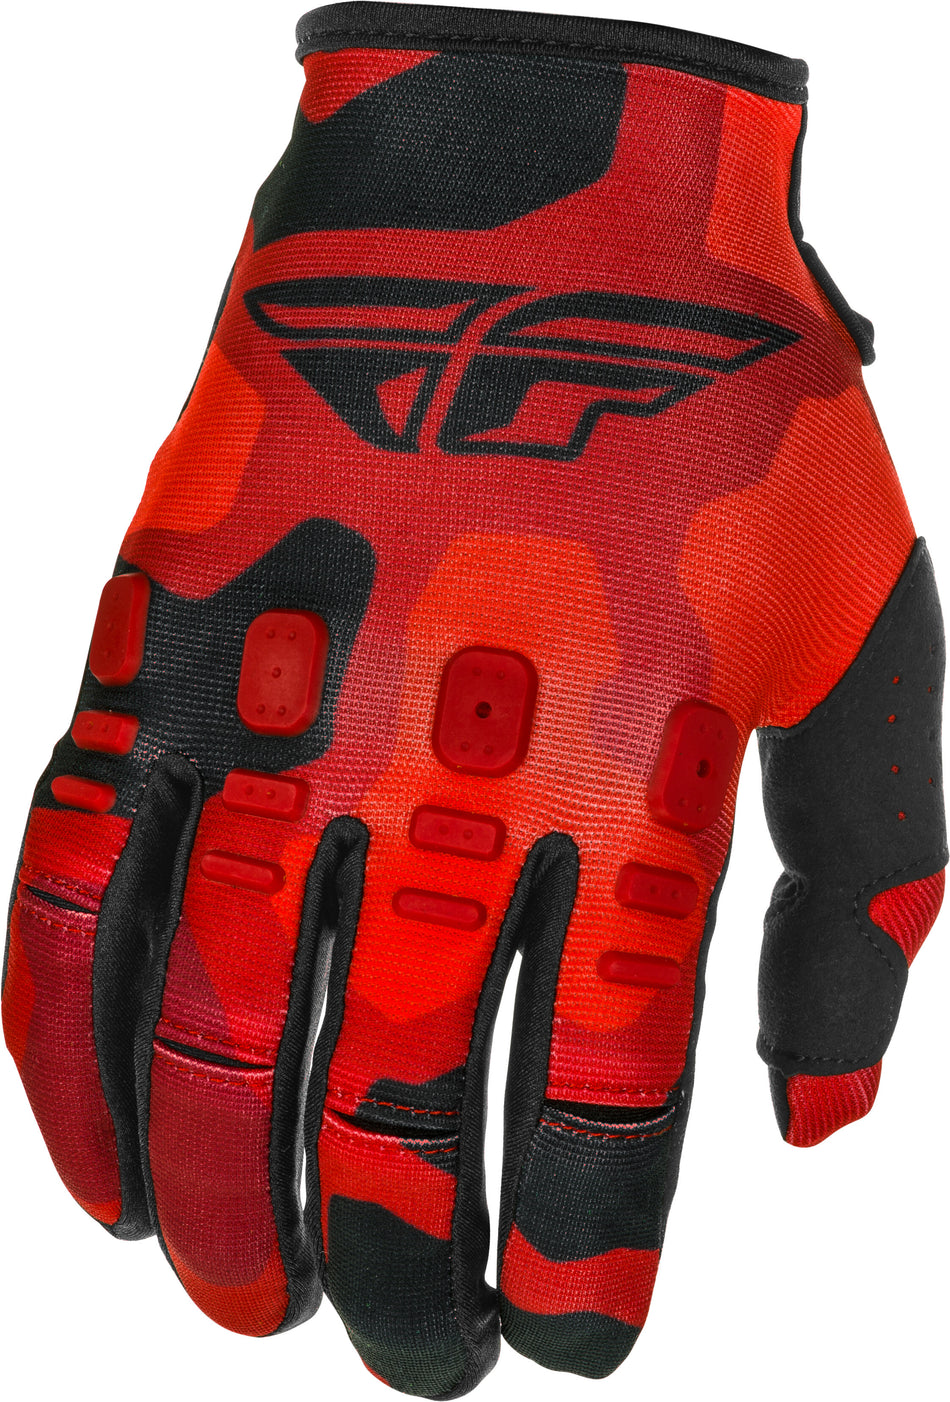 FLY RACING Kinetic K221 Gloves Red/Black Sz 10 374-51210